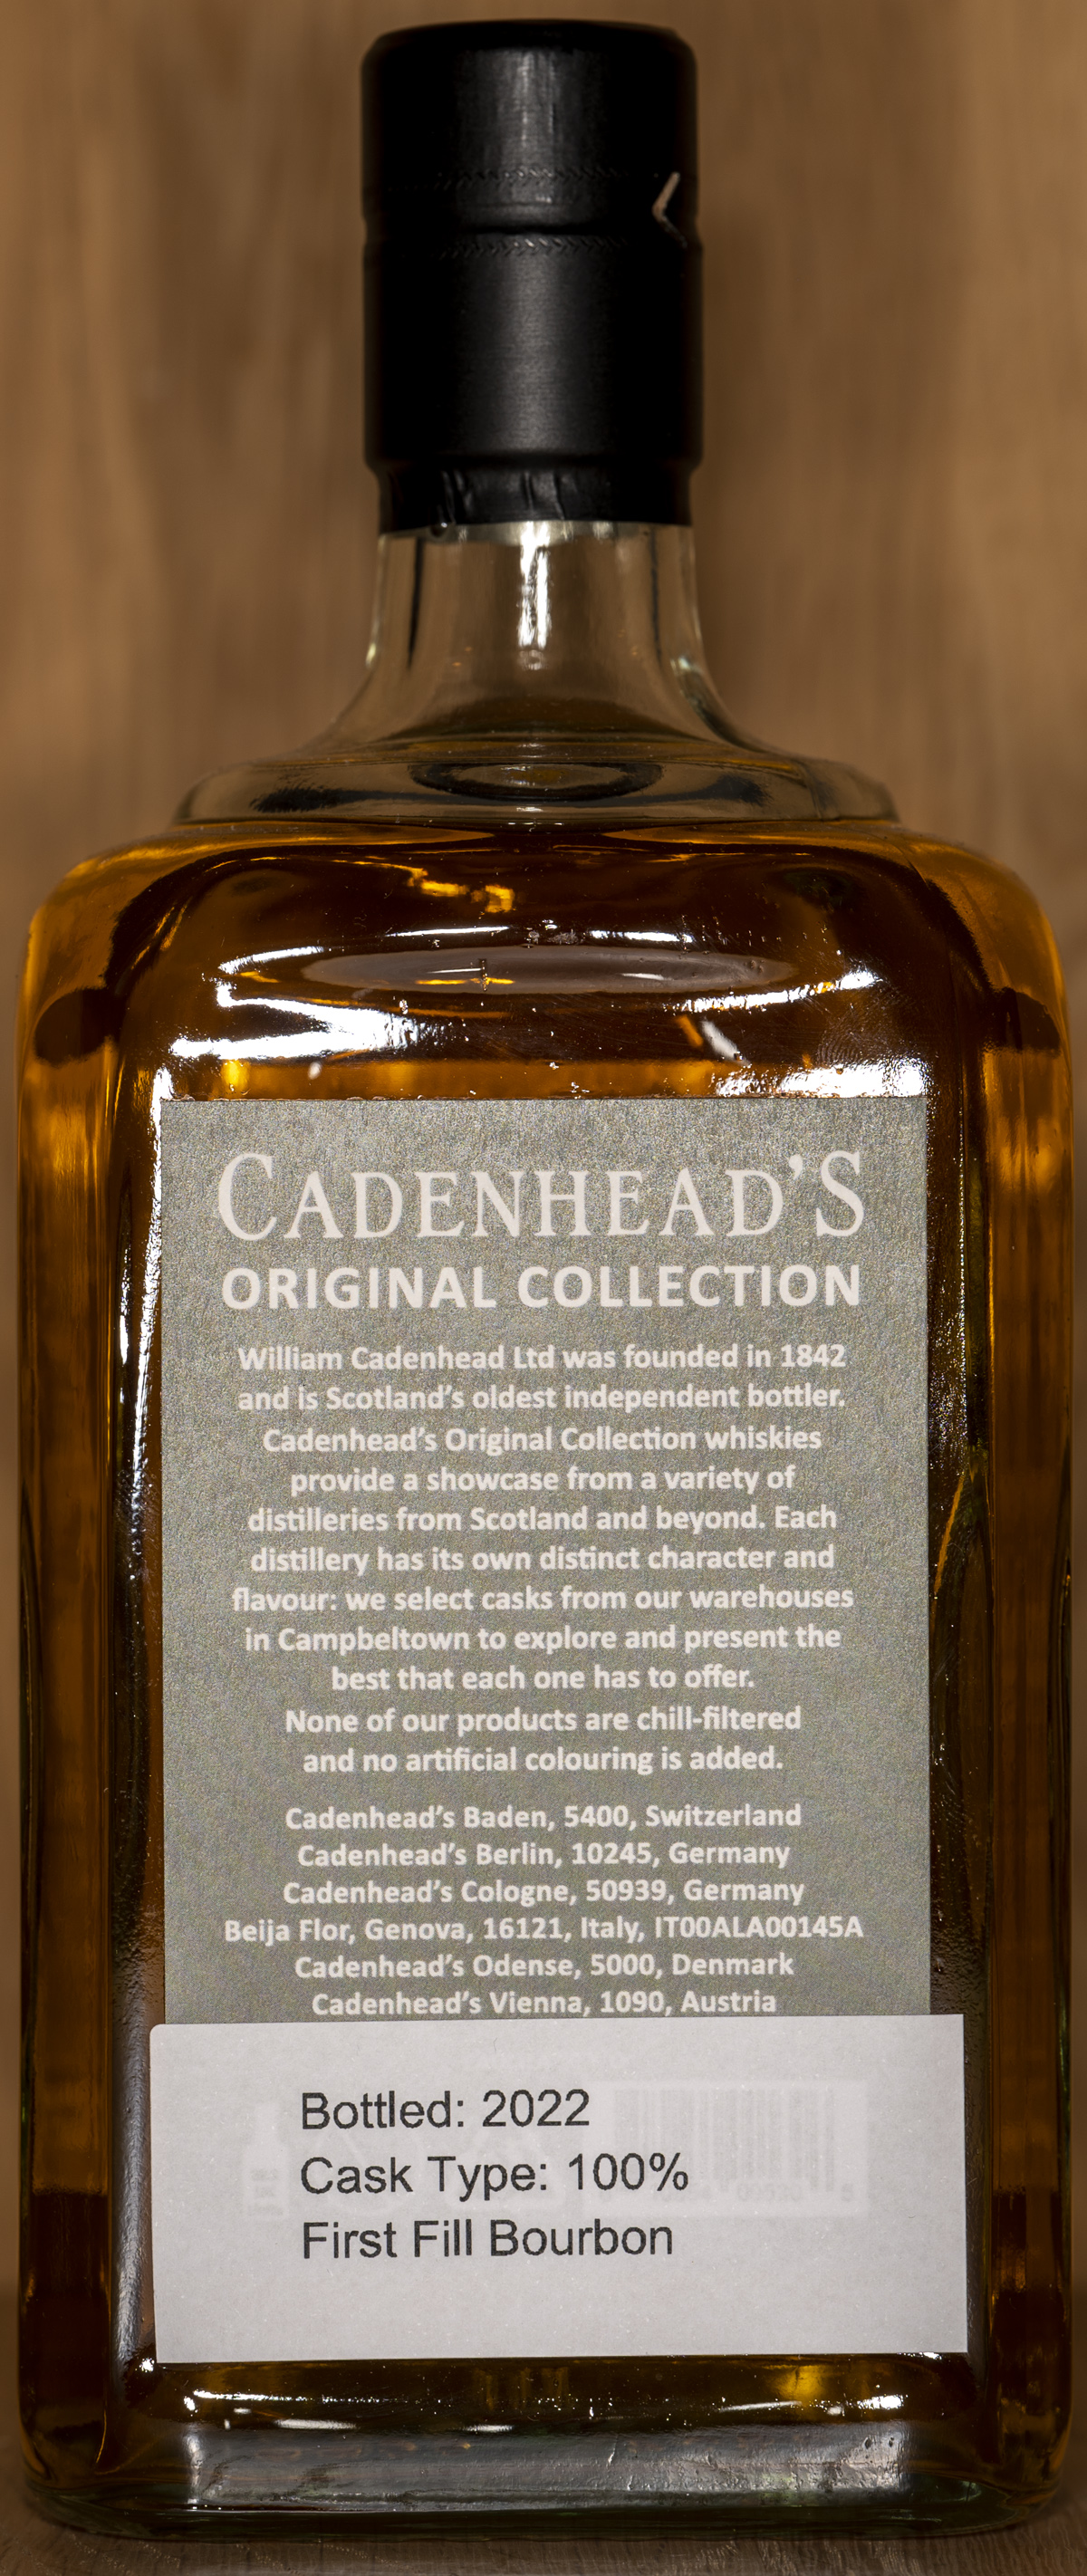 Billede: DSC_5051 - Cadenheads Original Collection Caol Ila 10 - bottle back.jpg